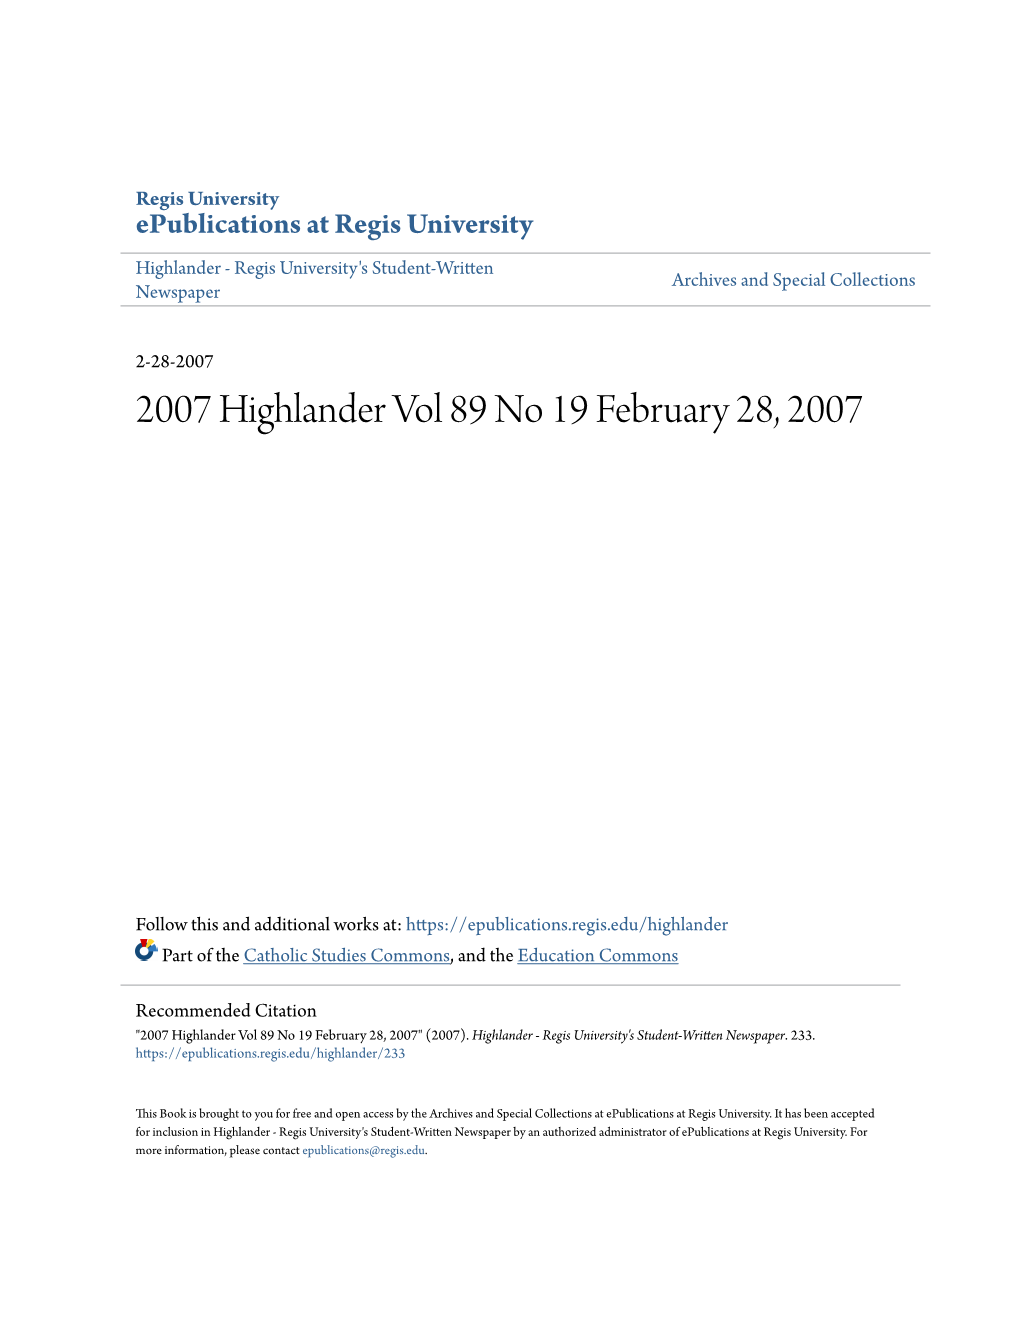 2007 Highlander Vol 89 No 19 February 28, 2007